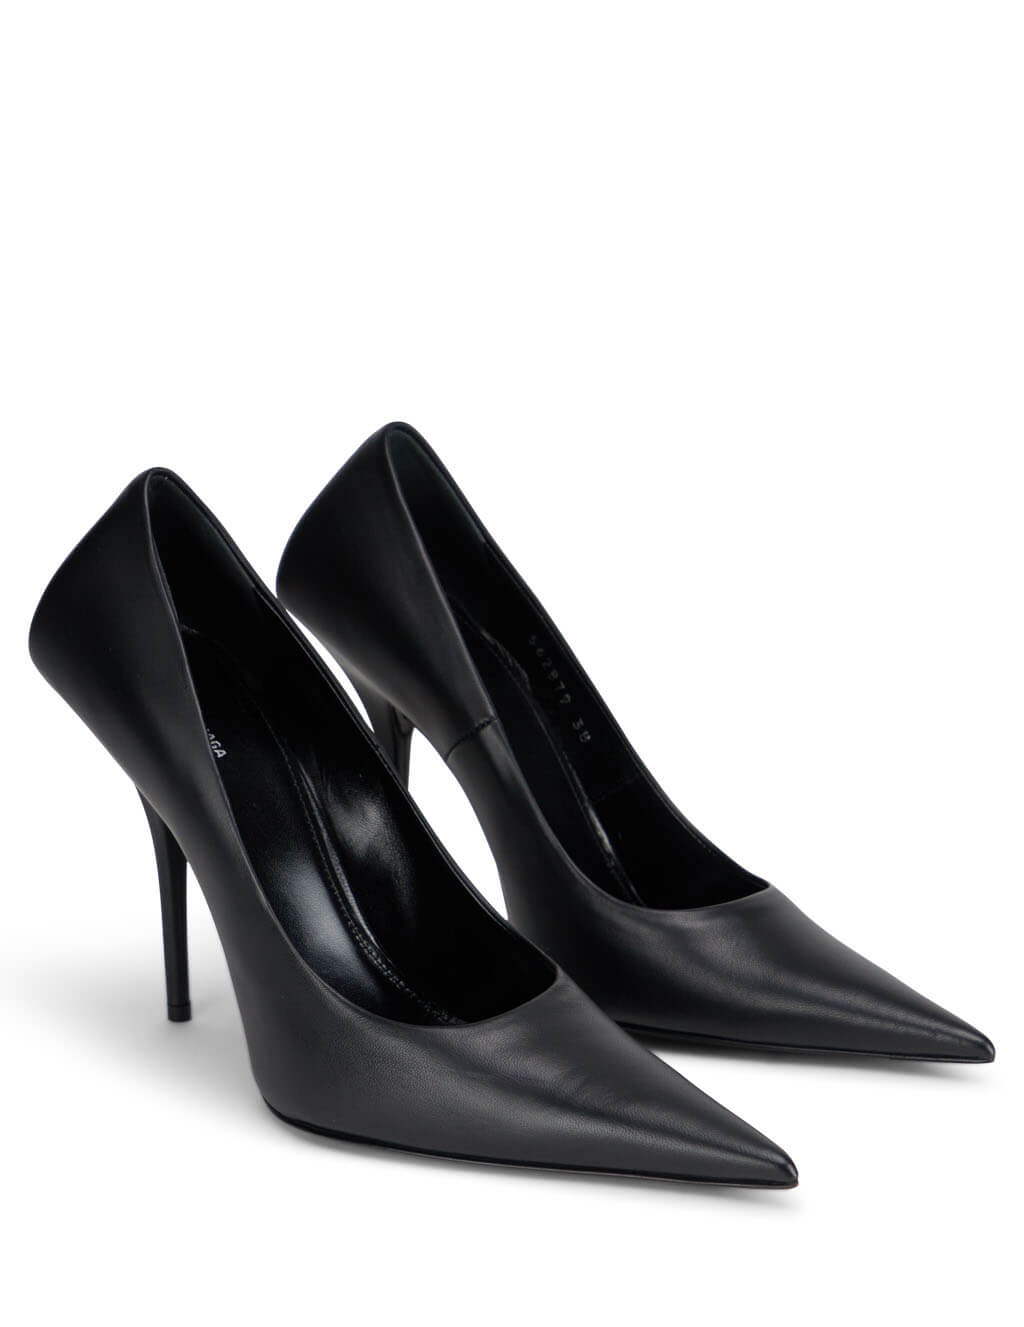 balenciaga black heels